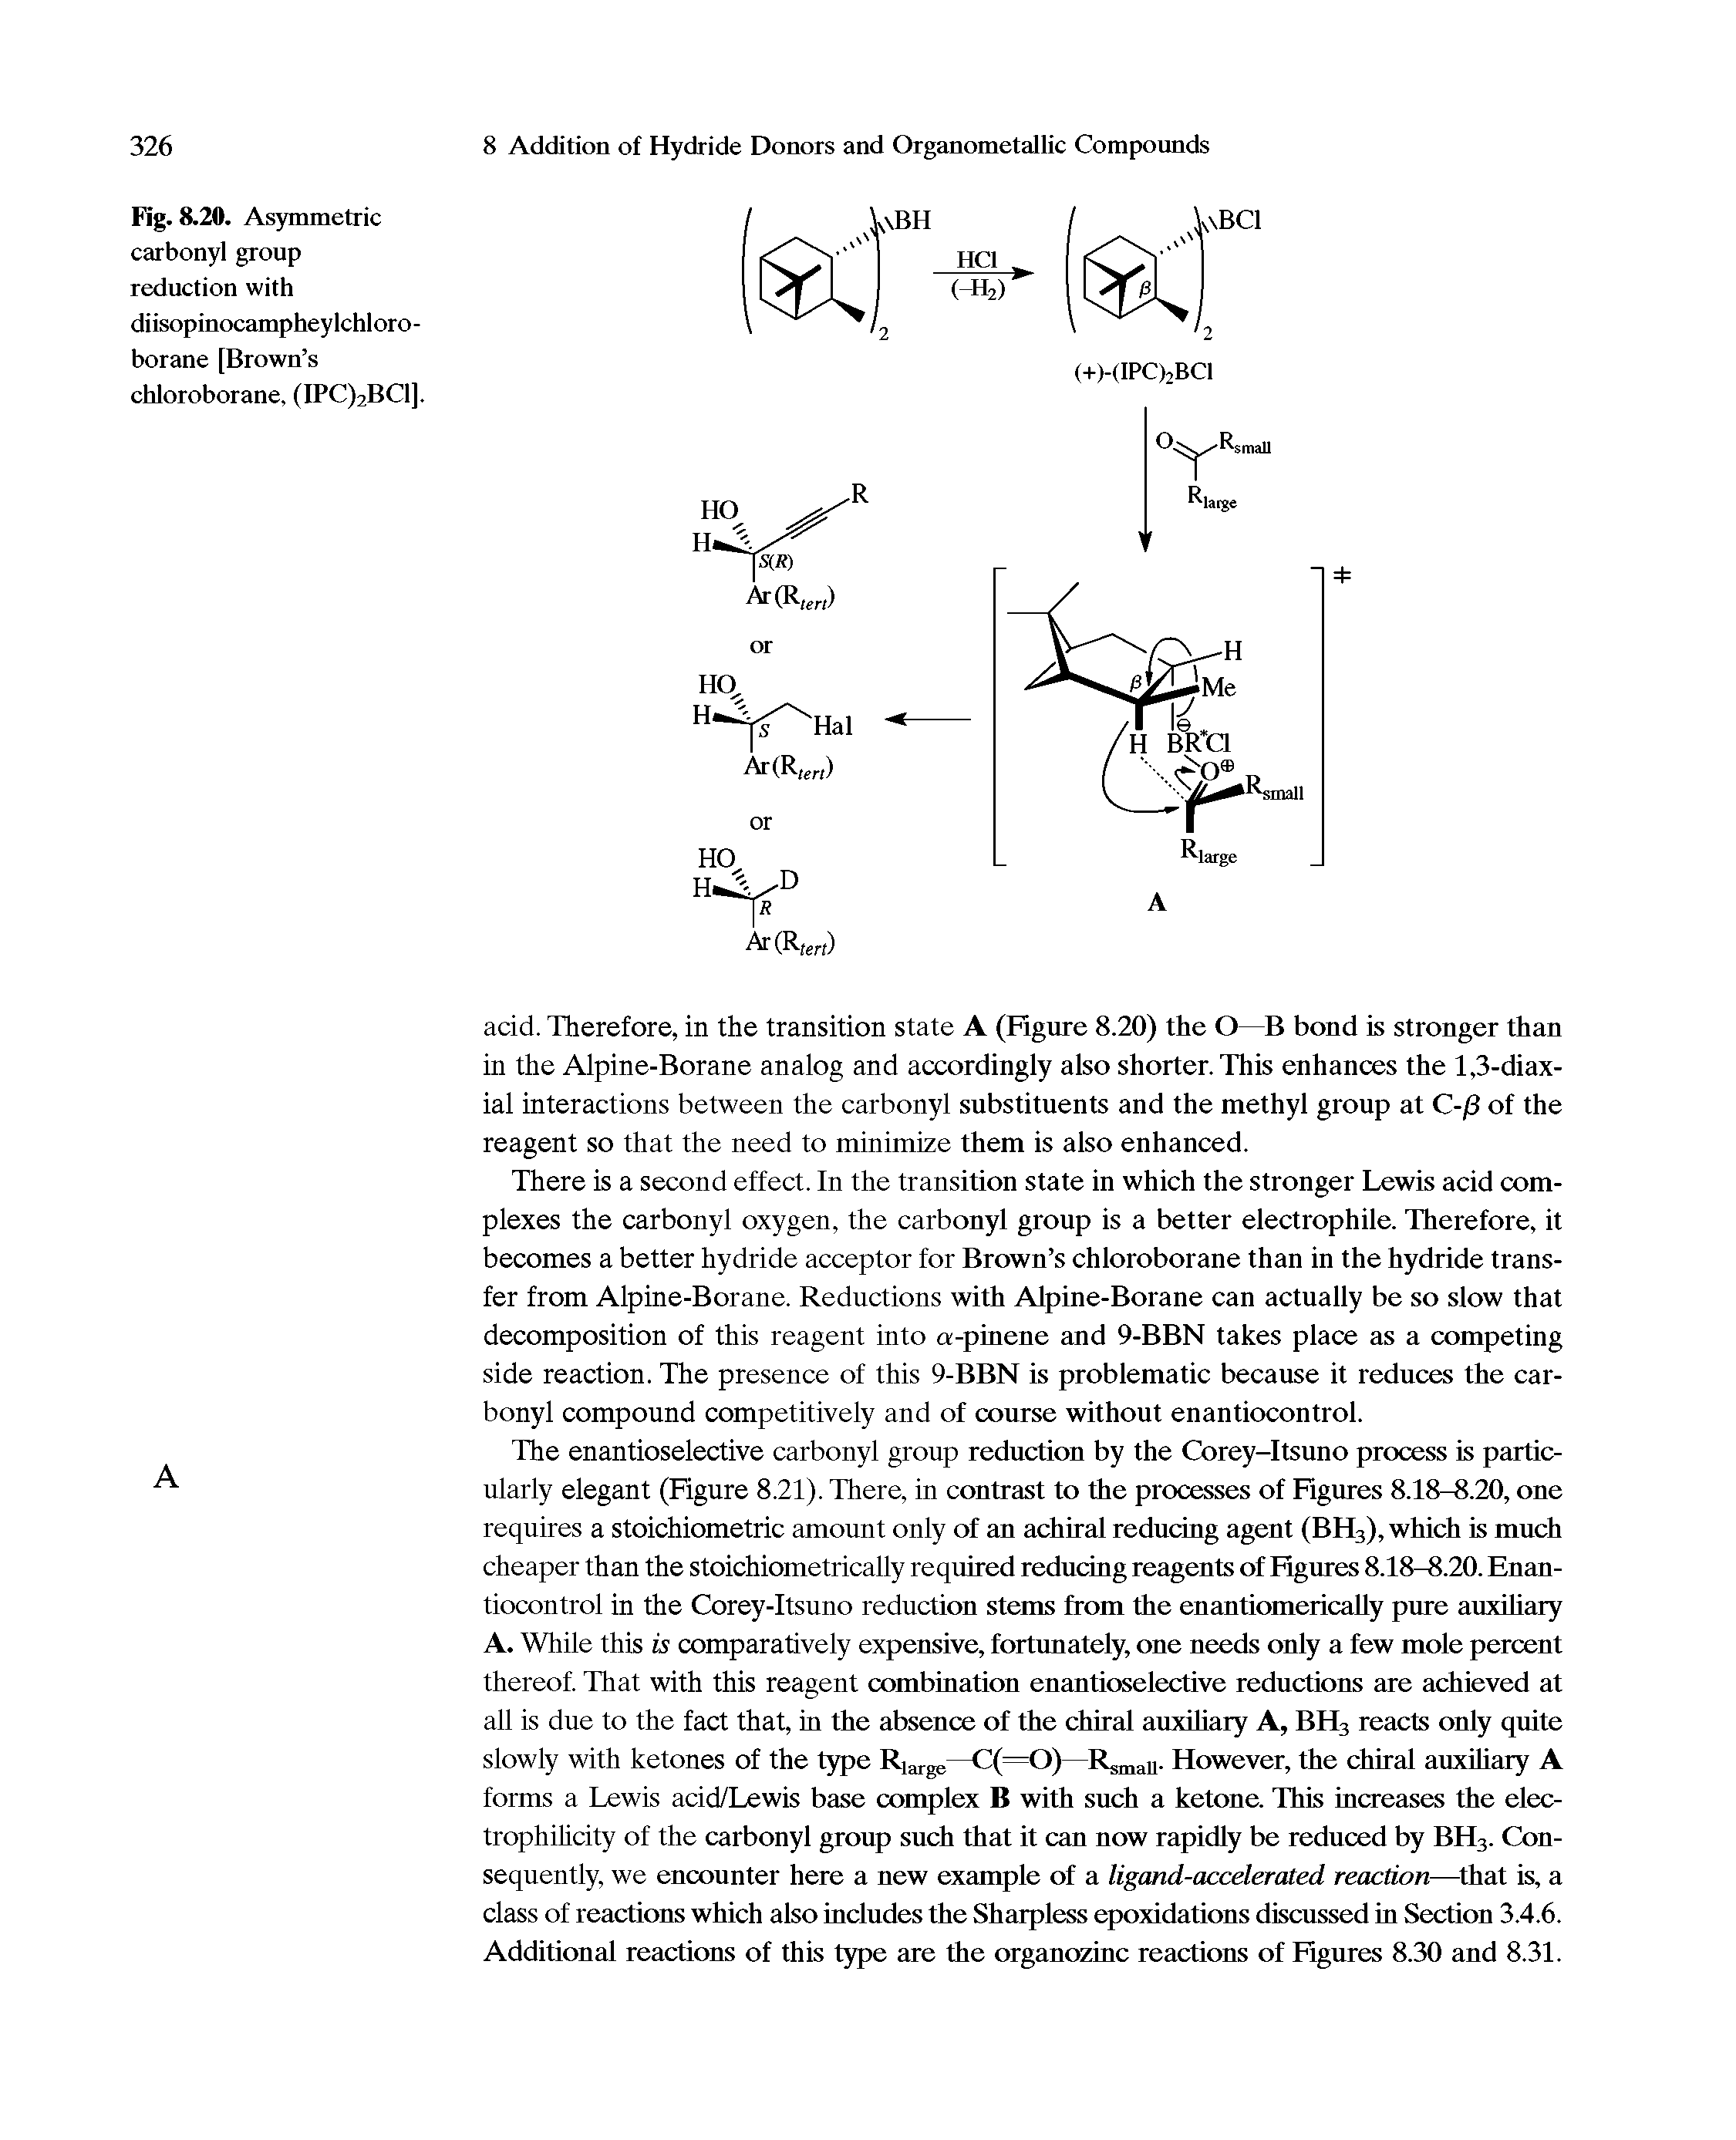 Fig. 8.20. Asymmetric carbonyl group reduction with diisopinocampheylchloro-borane [Brown s chloroborane, (IPC)2BC1].